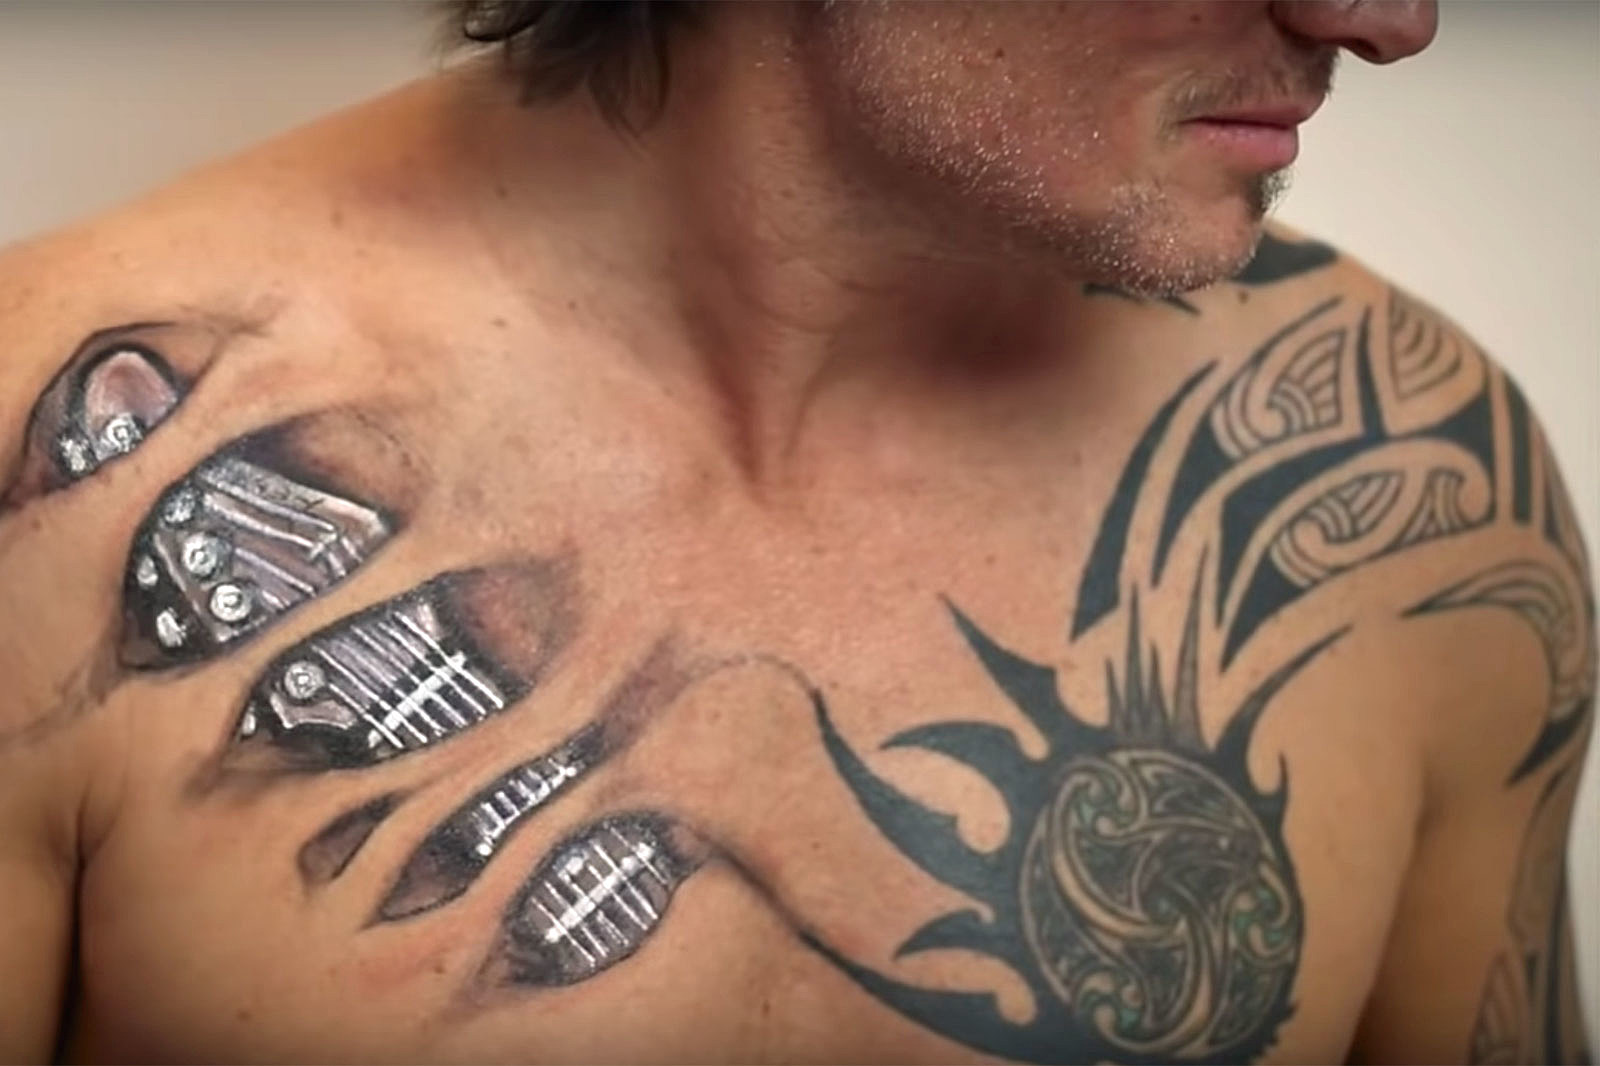 Hardly Anyone Noticed Keith Urban's New Tattoo at the ACM Awards